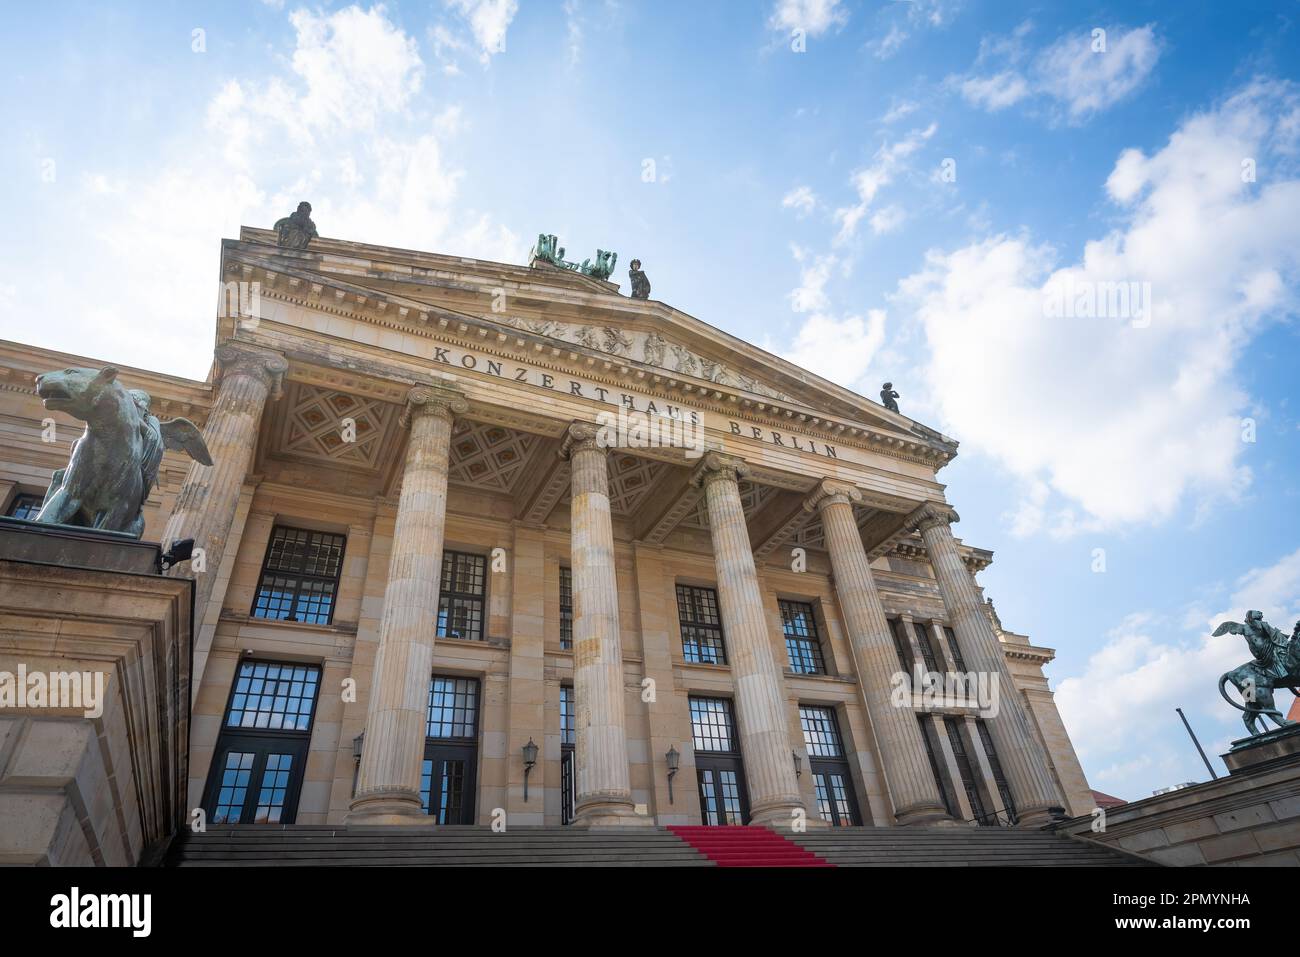 Berlin Concert Hall at Gendarmenmarkt Square - Berlin, Germany Stock Photo